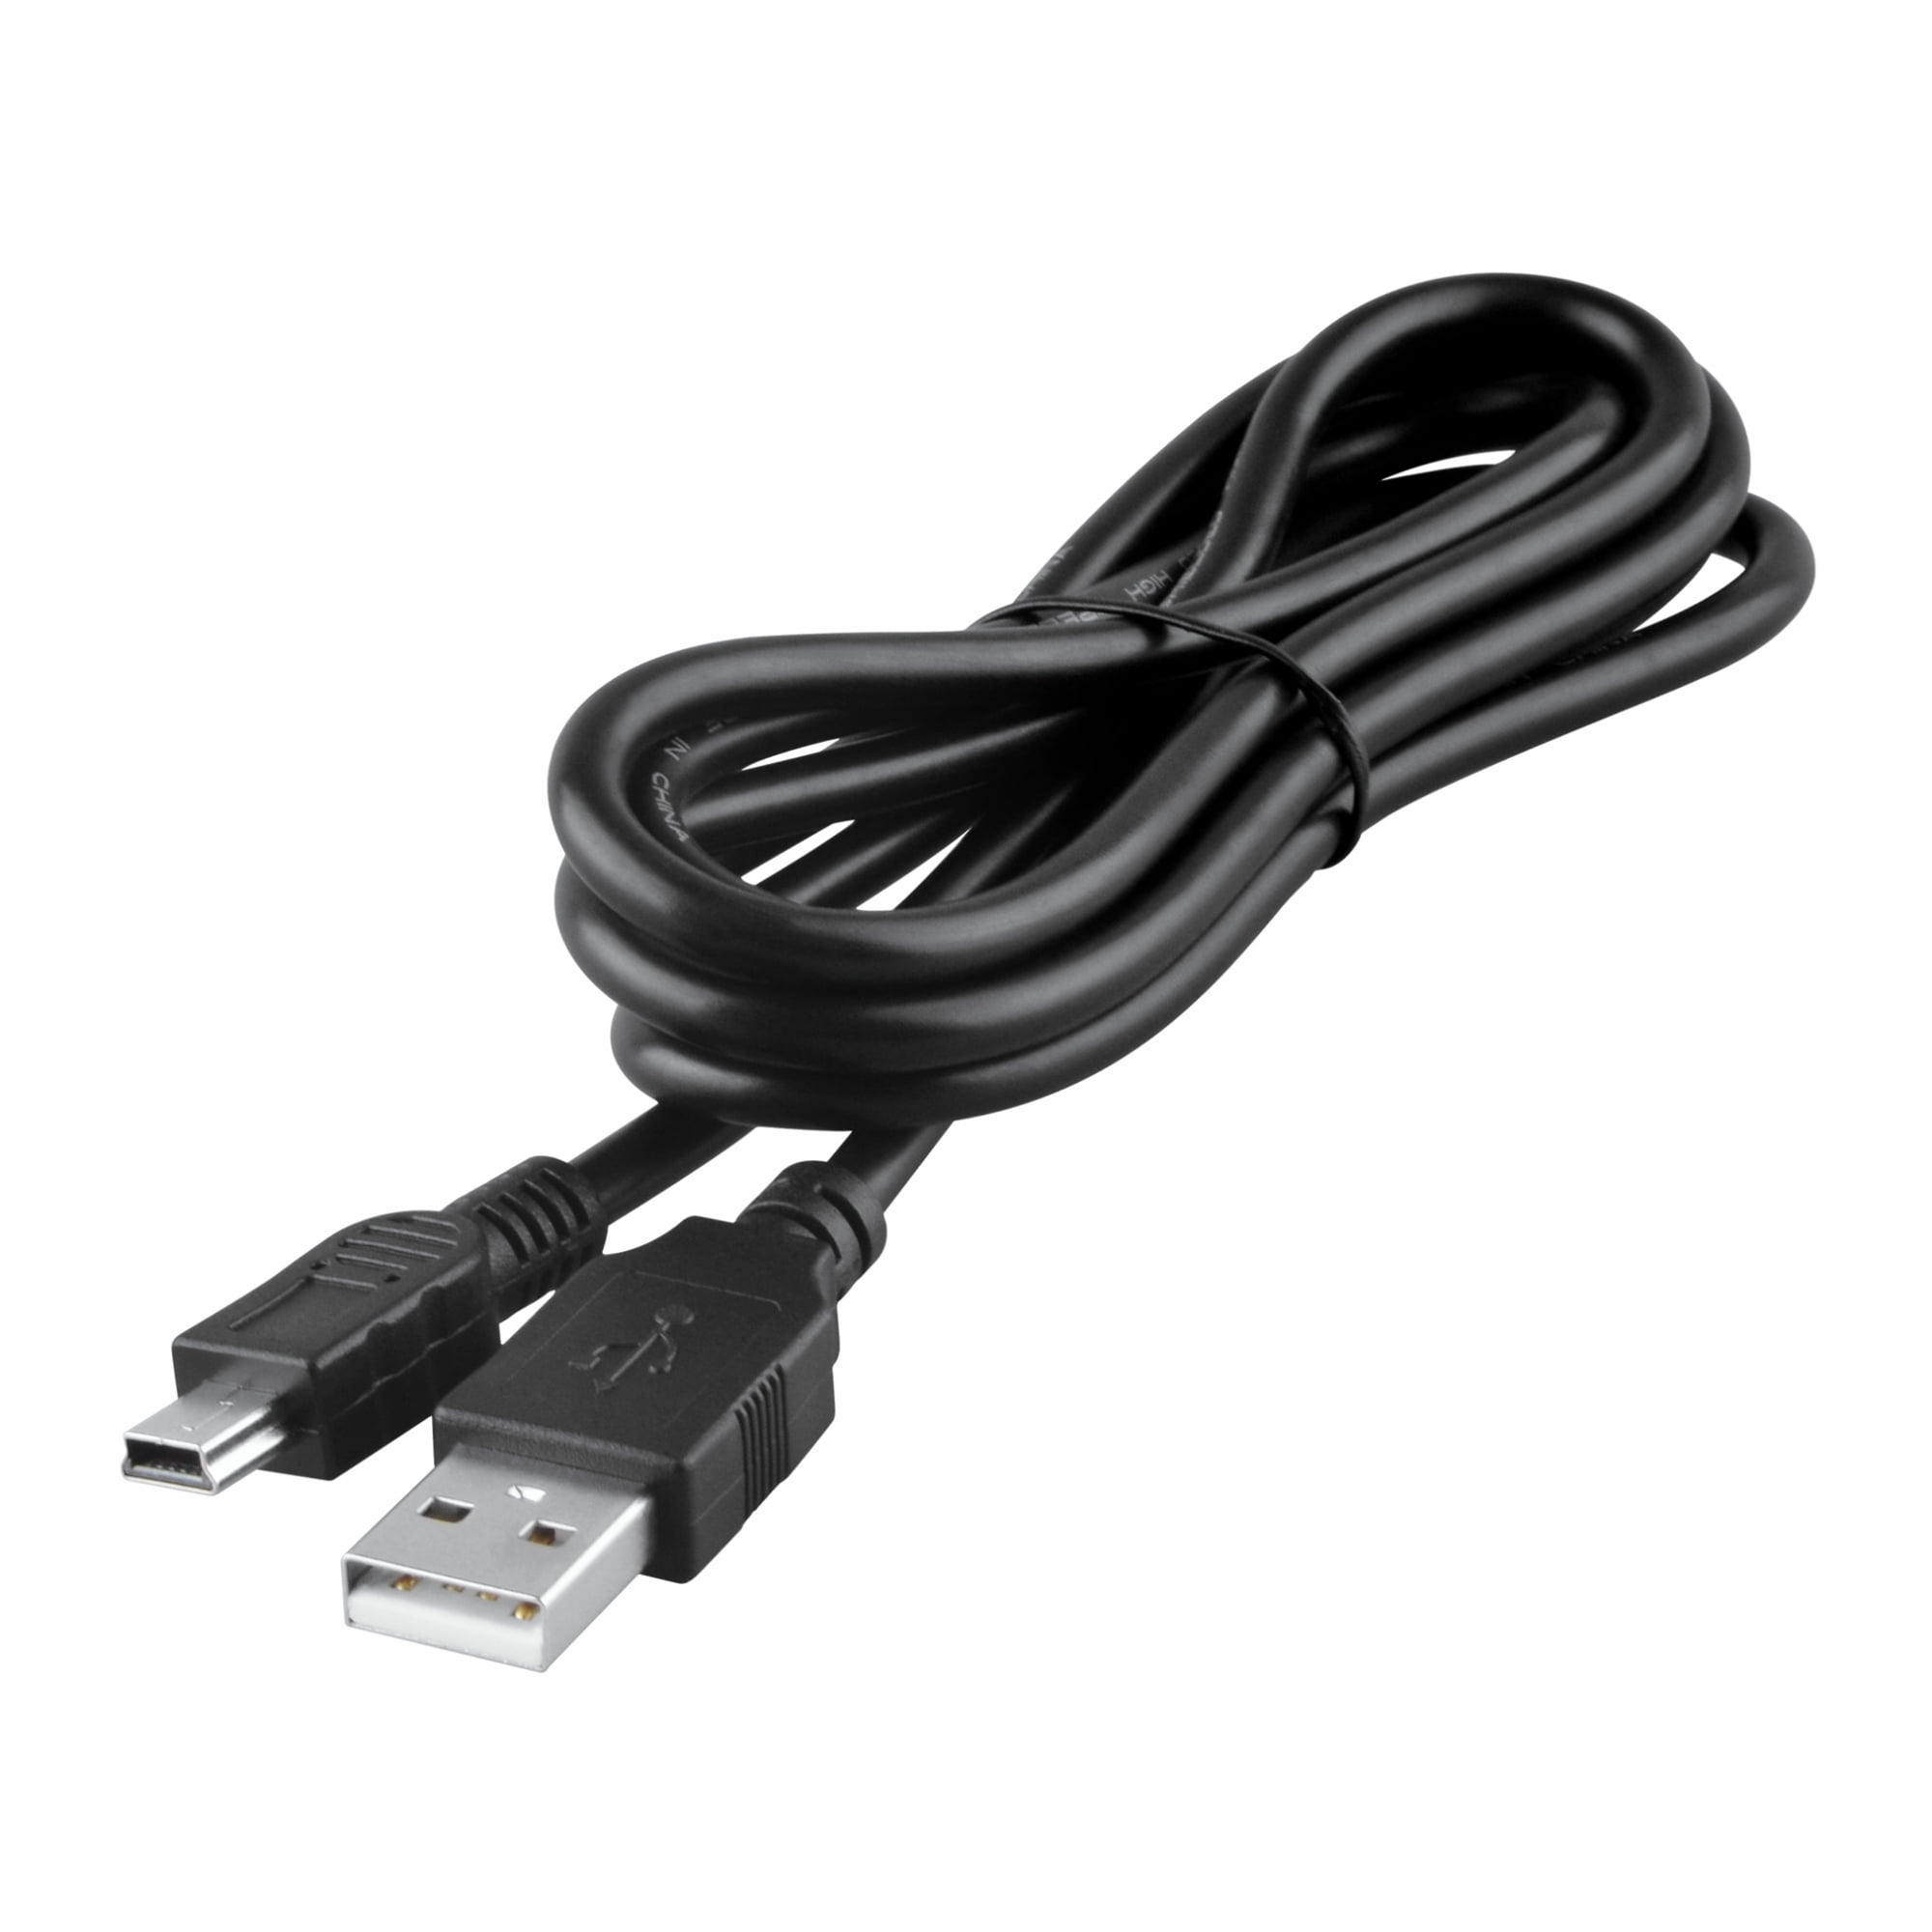 USB PC Computer Data Cable/Cord/Lead For Canon CAMERA EOS Digital Rebel T2/i 